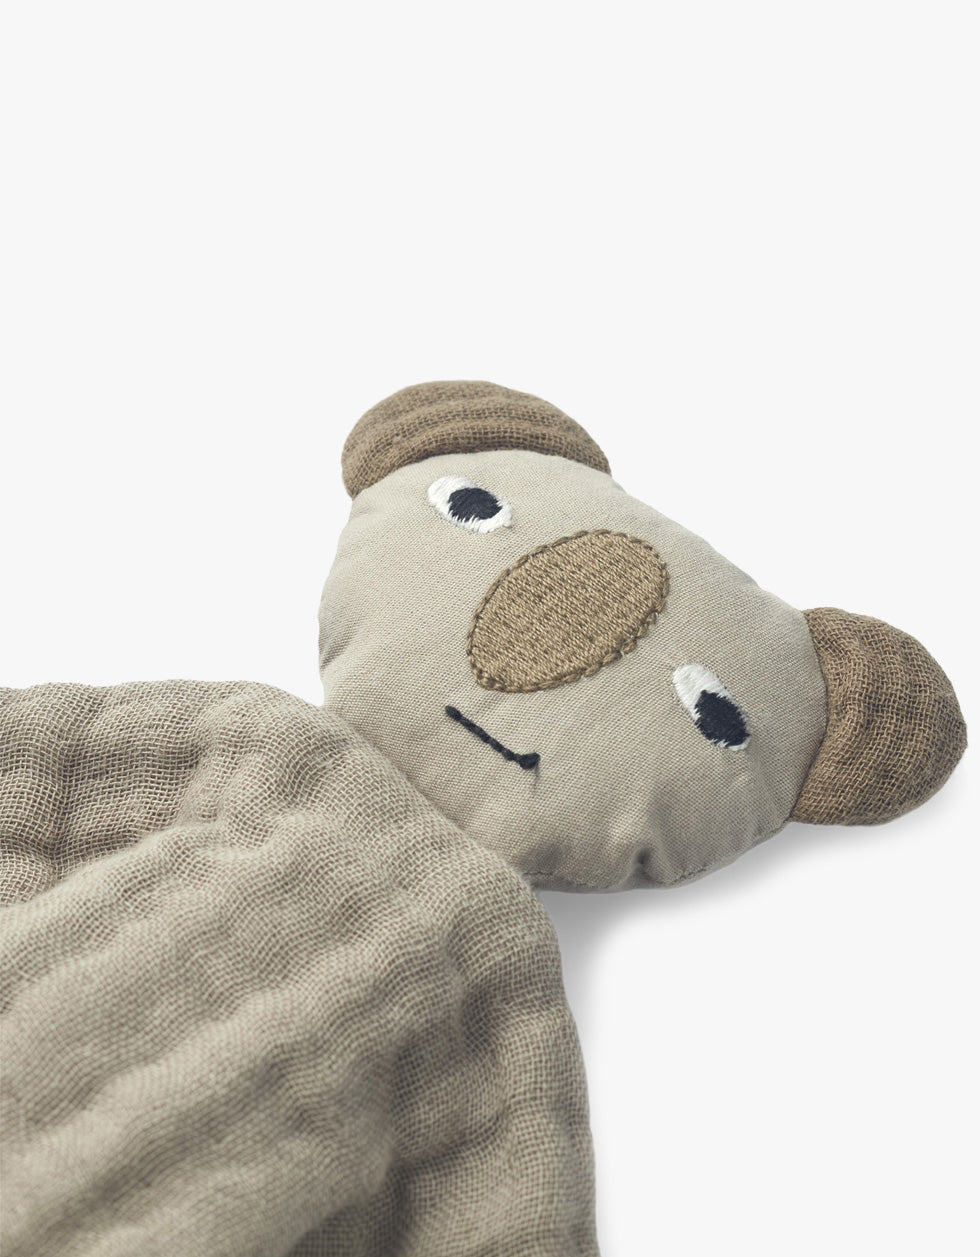 Amaya Cuddle Teddy - Koala/Mist